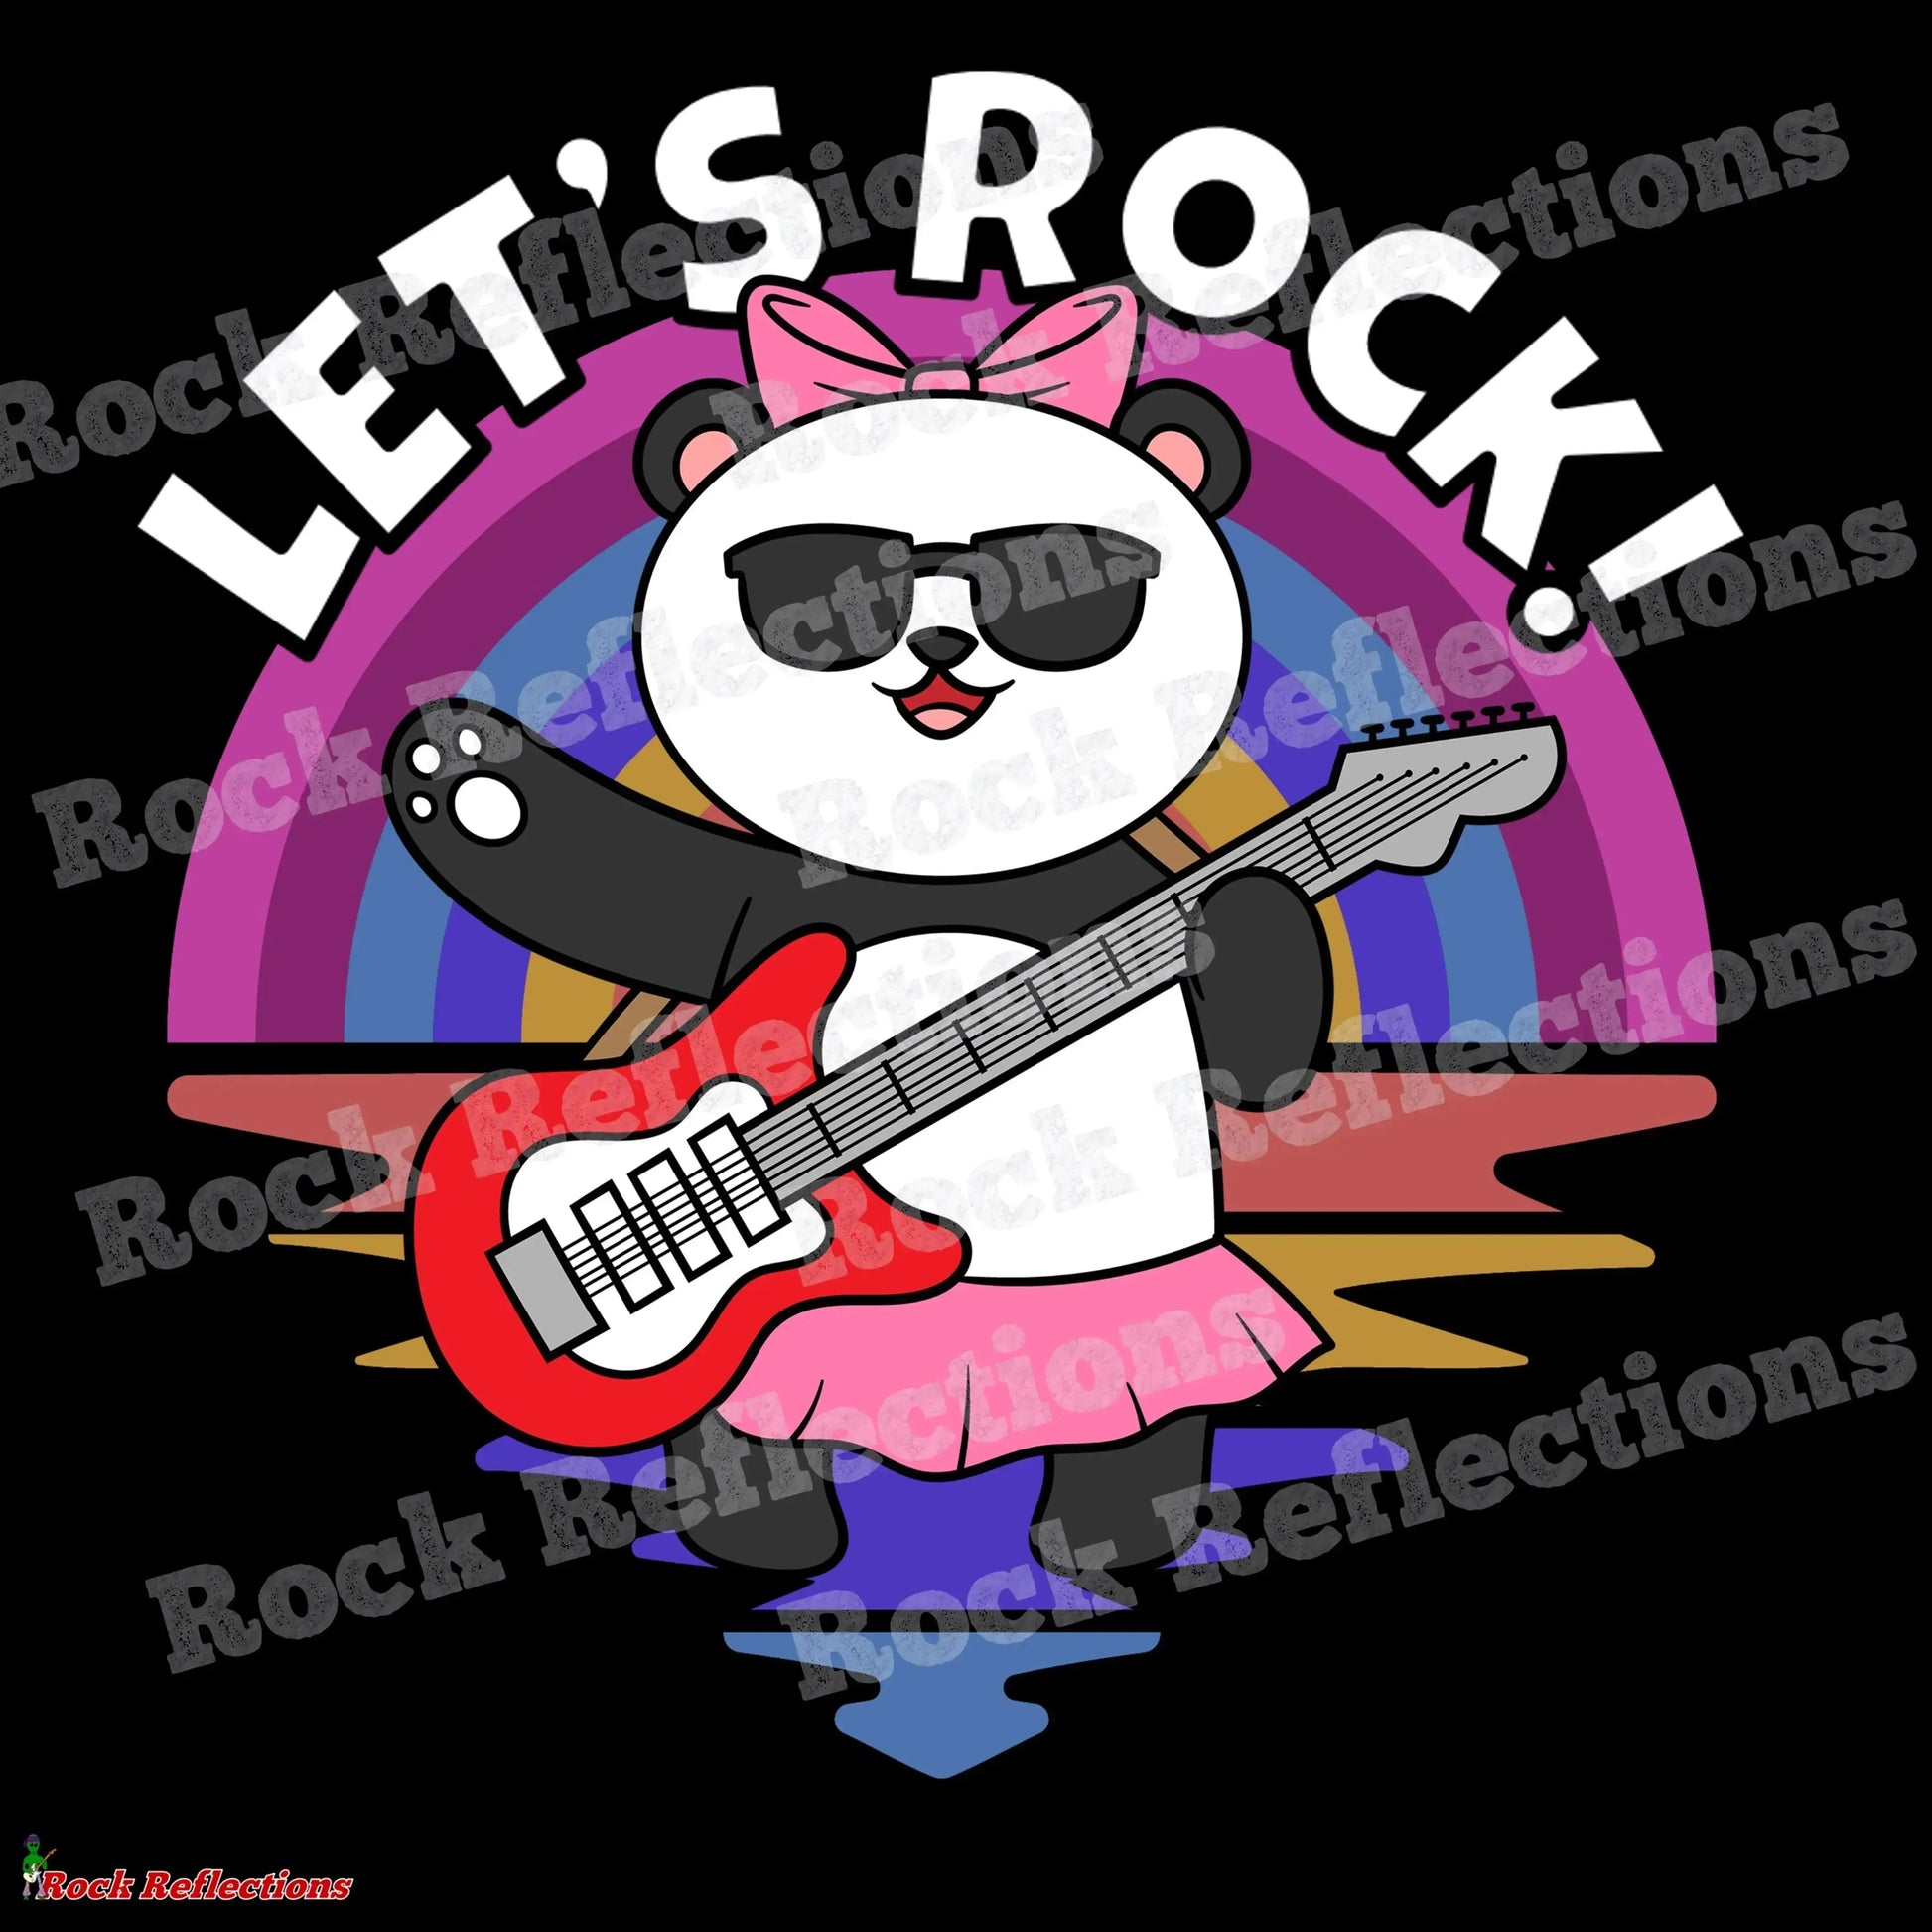 Let's Rock Panda SPOD